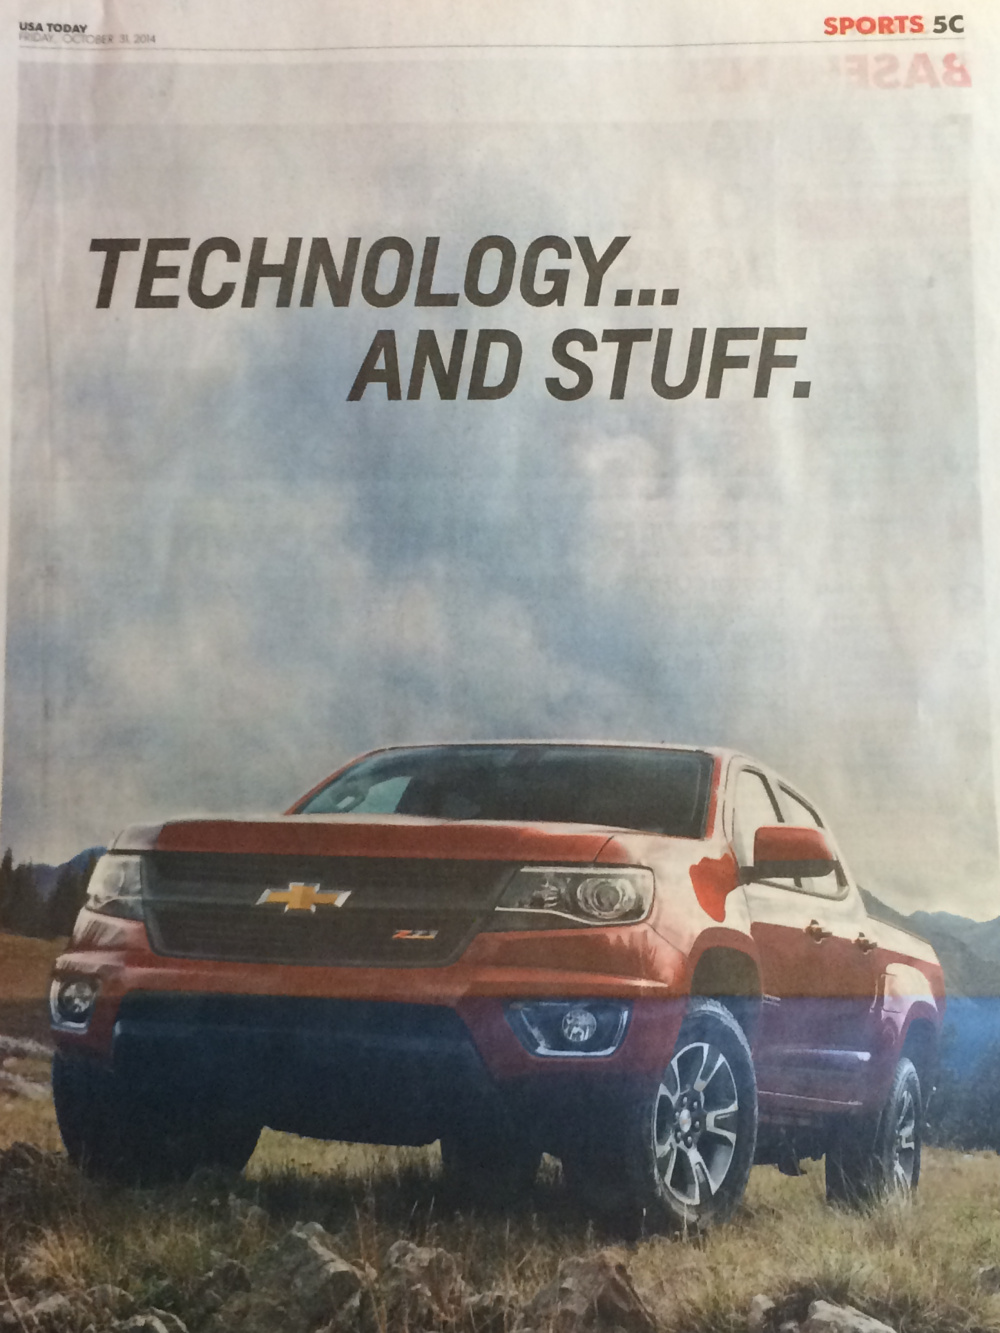 Newspaper ad of new Chevrolet pickup truck; headline 'Technology and stuff'